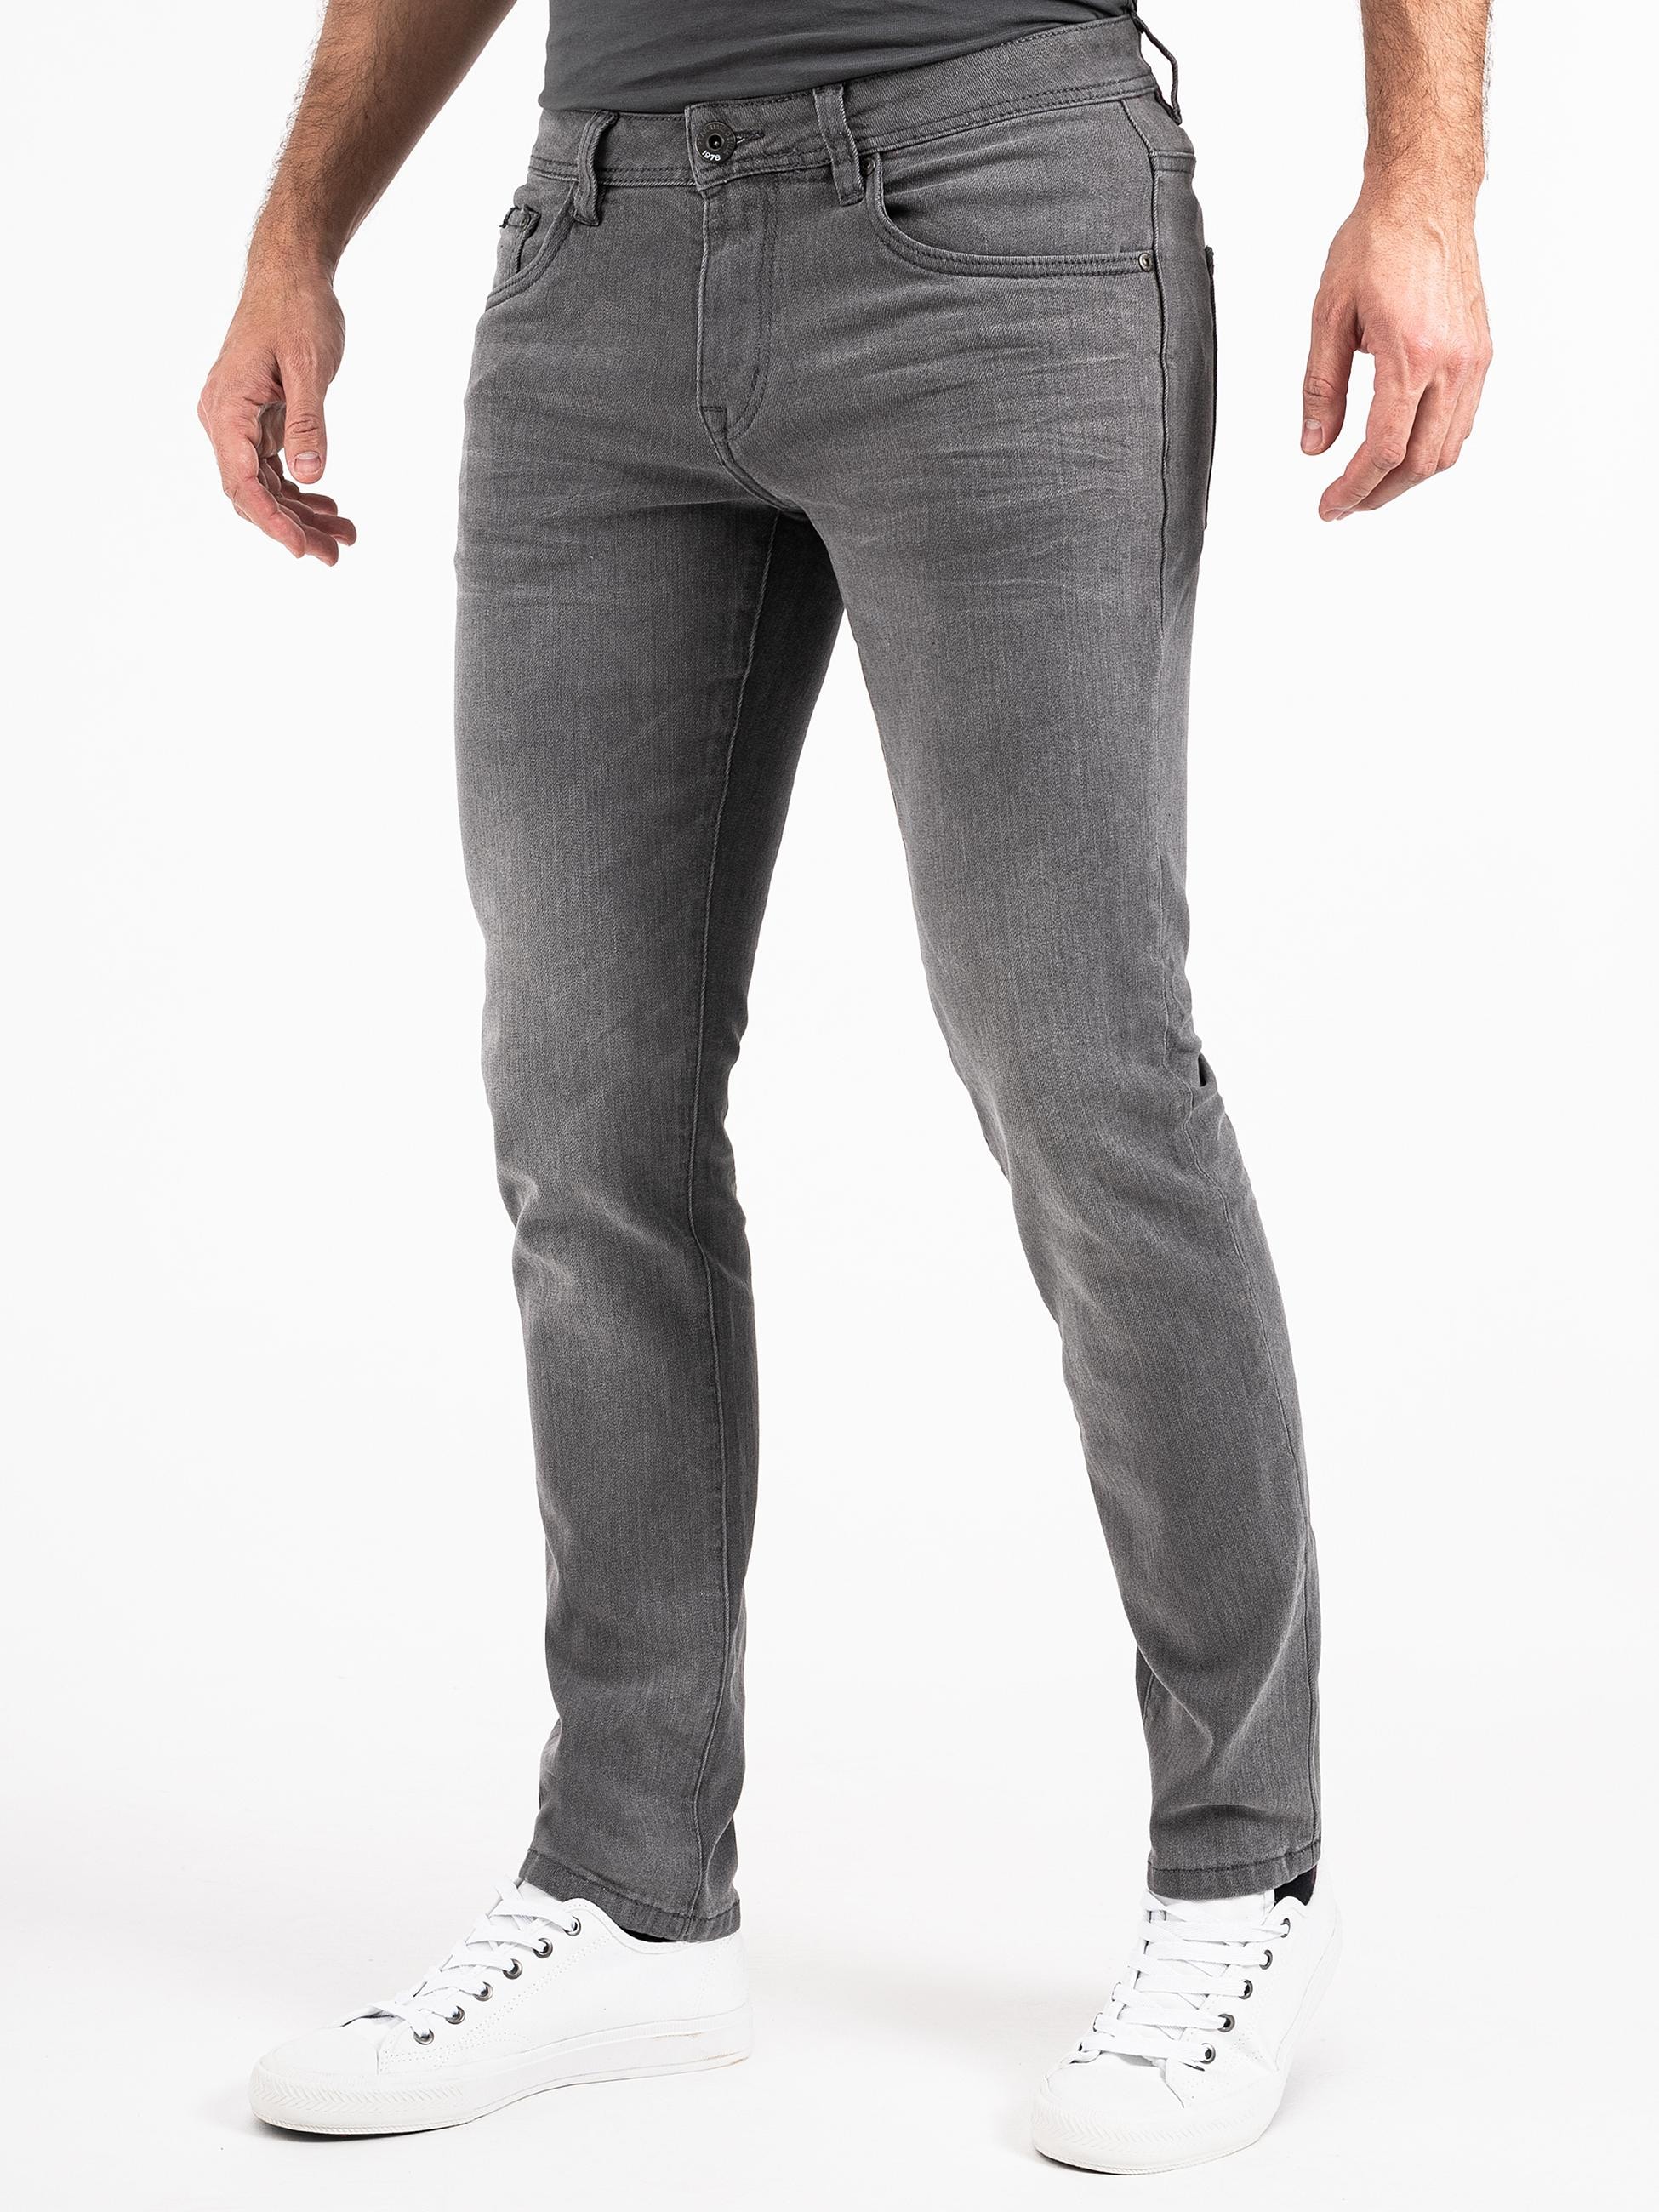 PEAK TIME Slim-fit-Jeans »Mailand«, Herren Jeans mit super hohem Stretch-Anteil